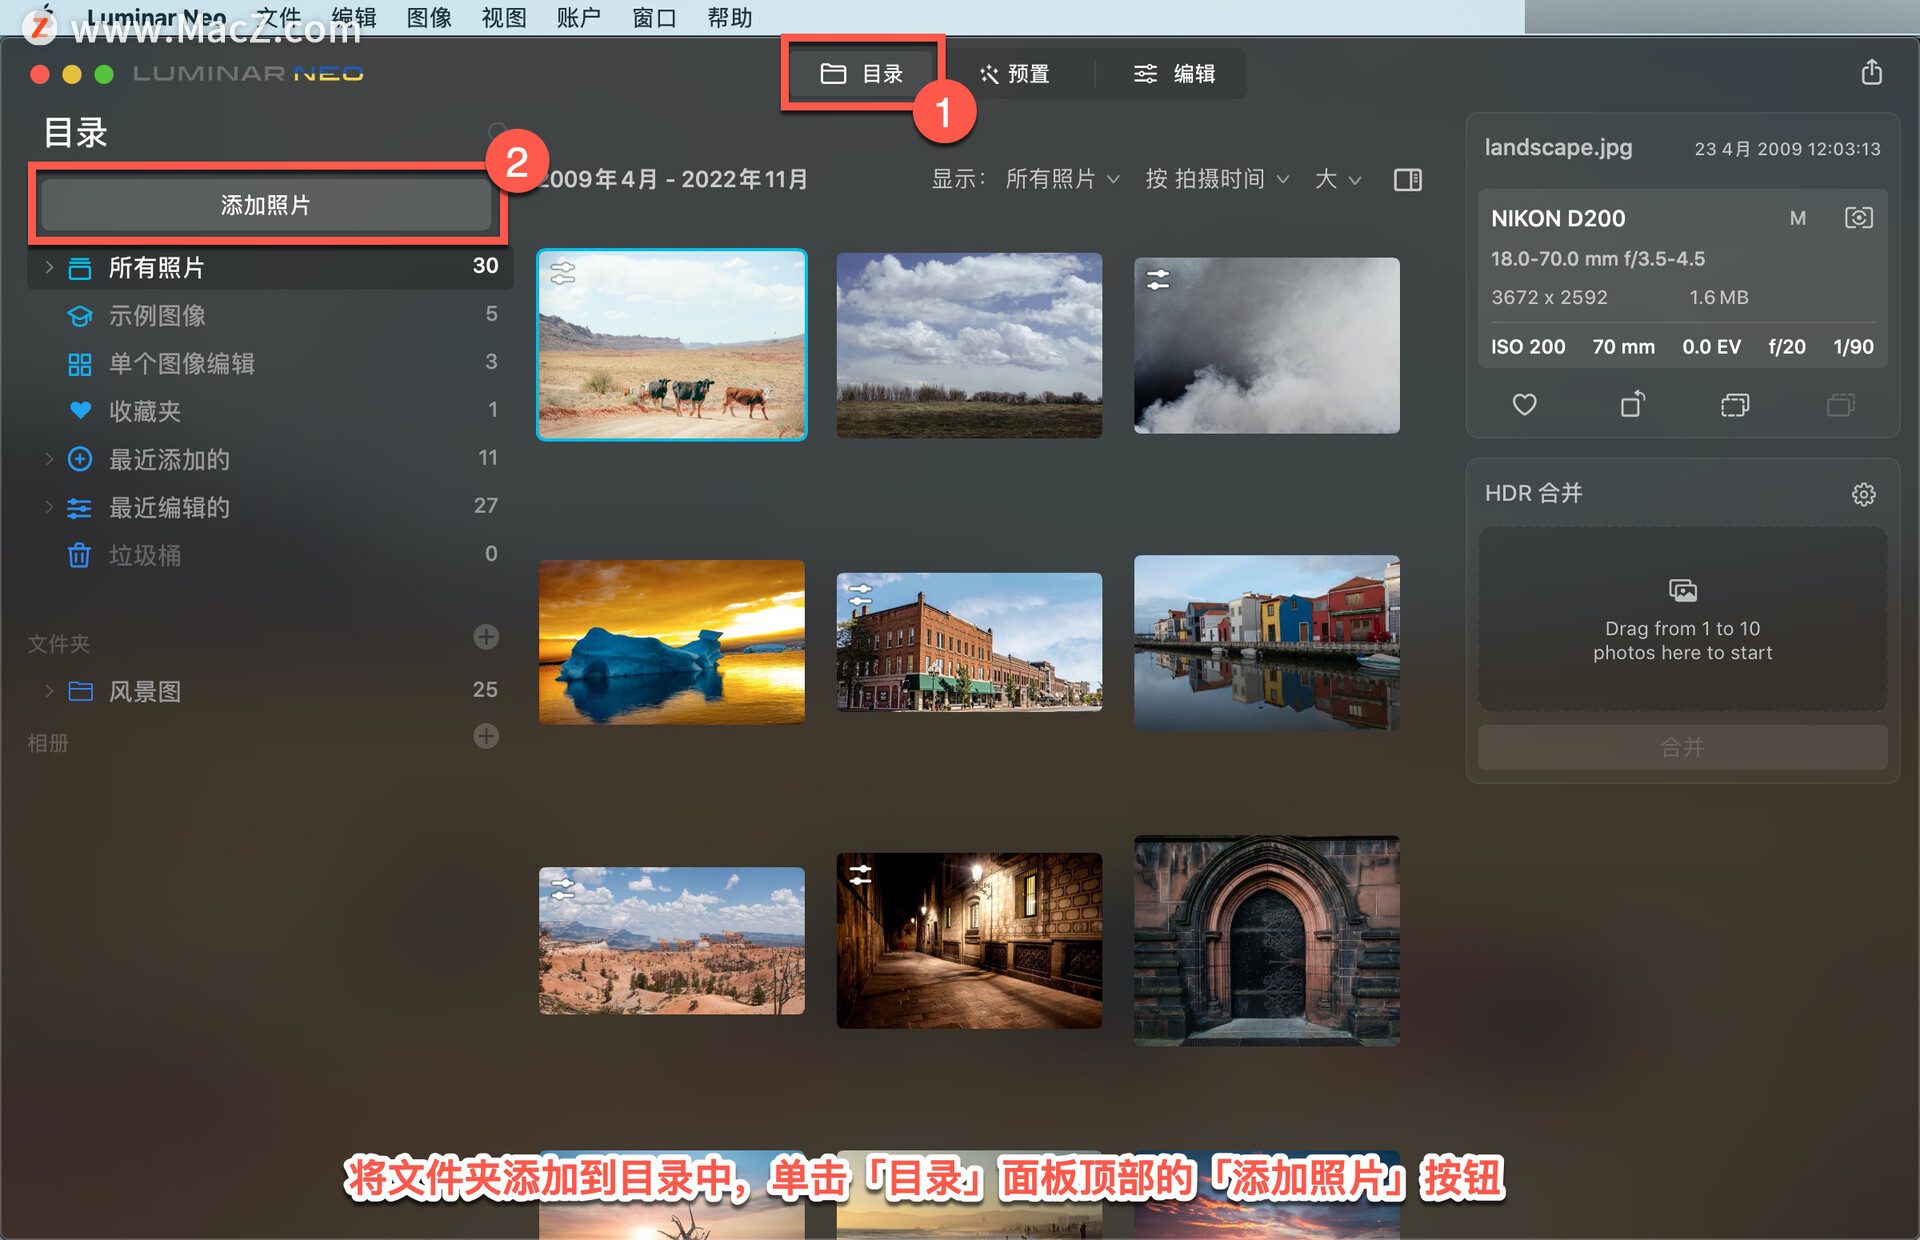 Luminar Neo 教程「50」，如何在 Luminar Neo 中使用文件夹组织图像？